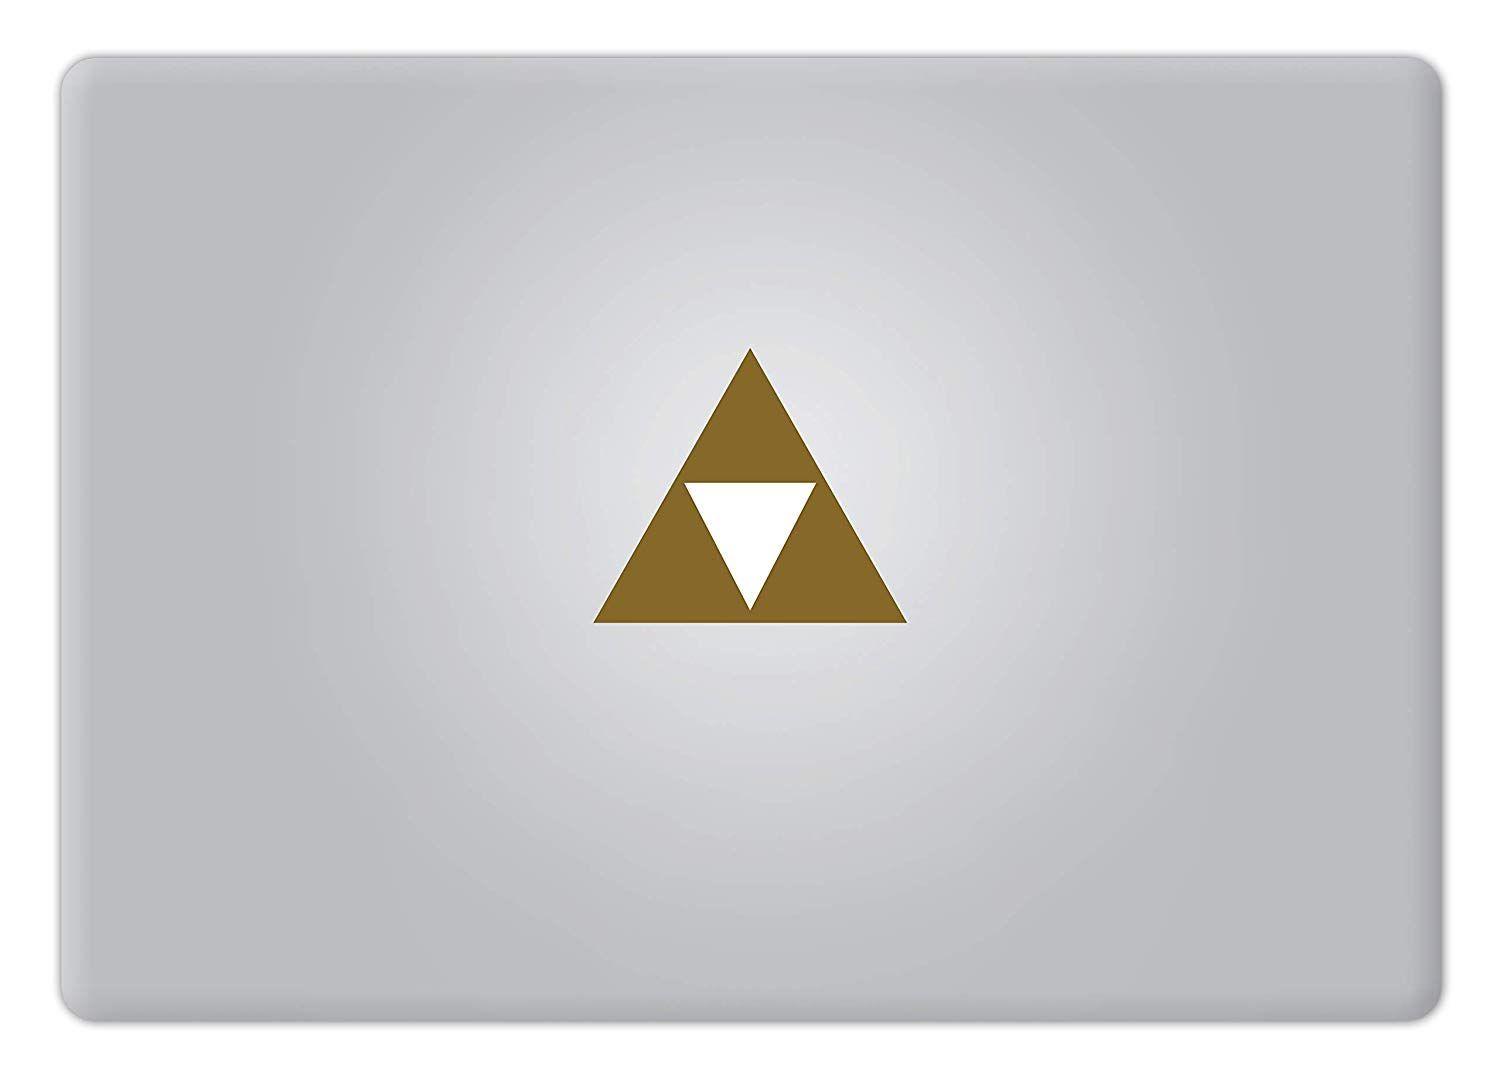 Triforce Logo - Amazon.com: Legend of Zelda TriForce Logo Small Macbook Decal Vinyl ...